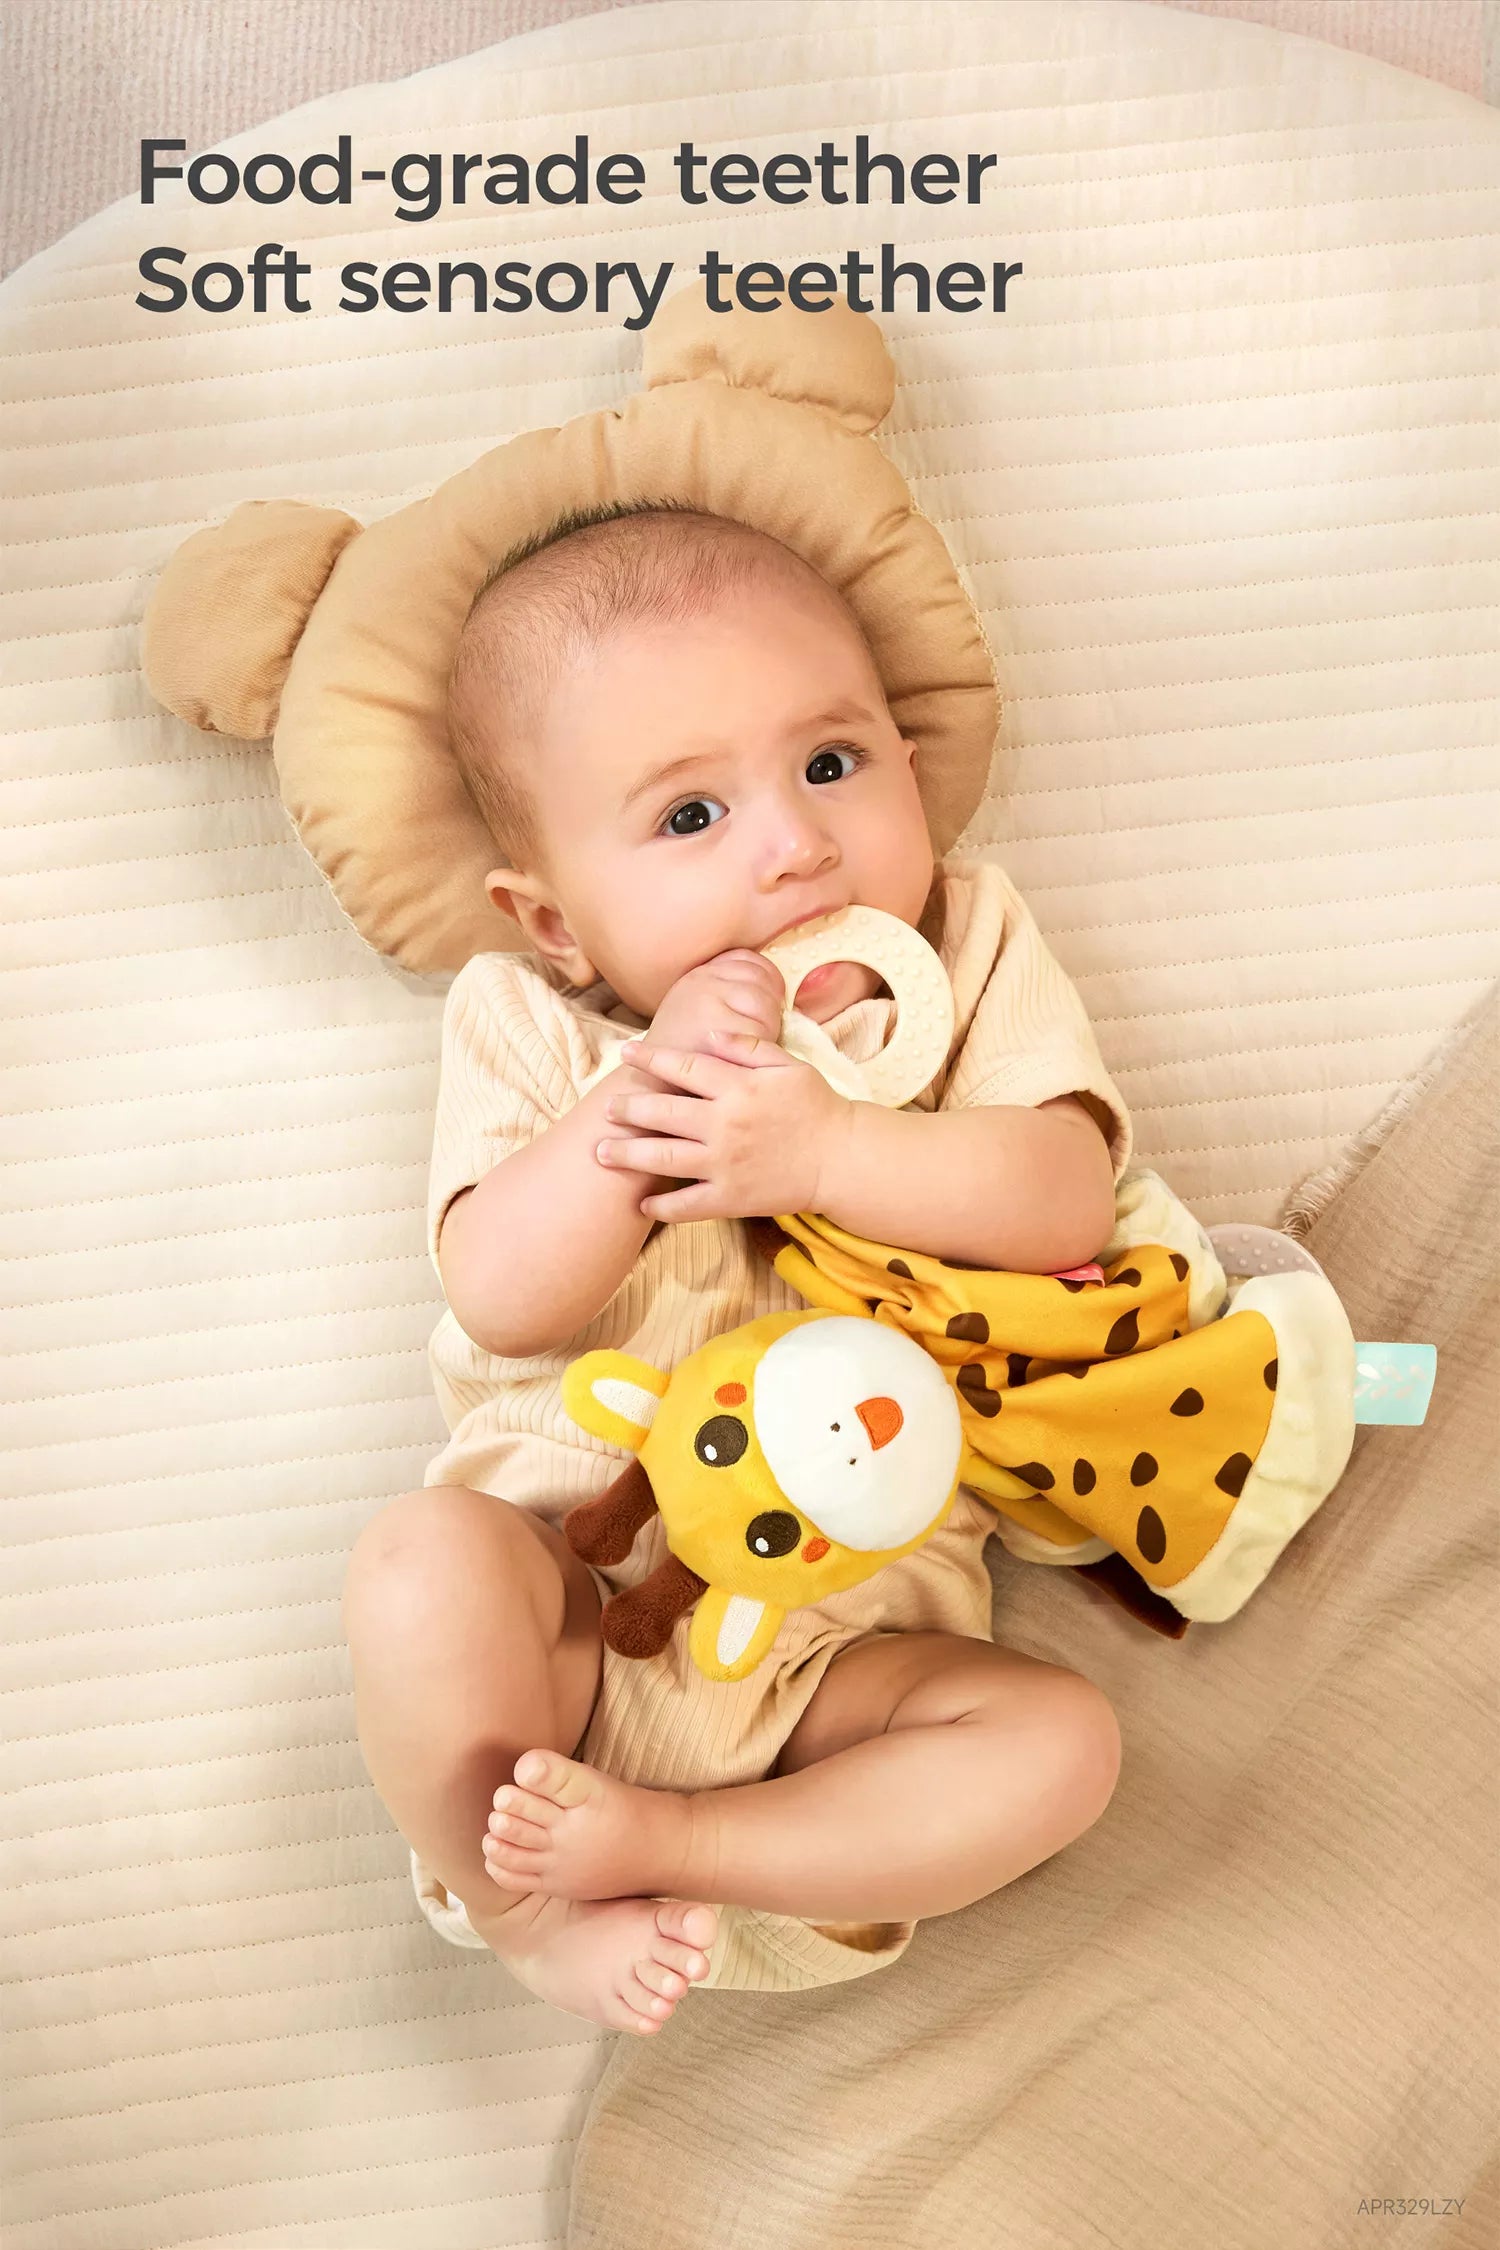 Snuggle toy with giraffe design for newborns